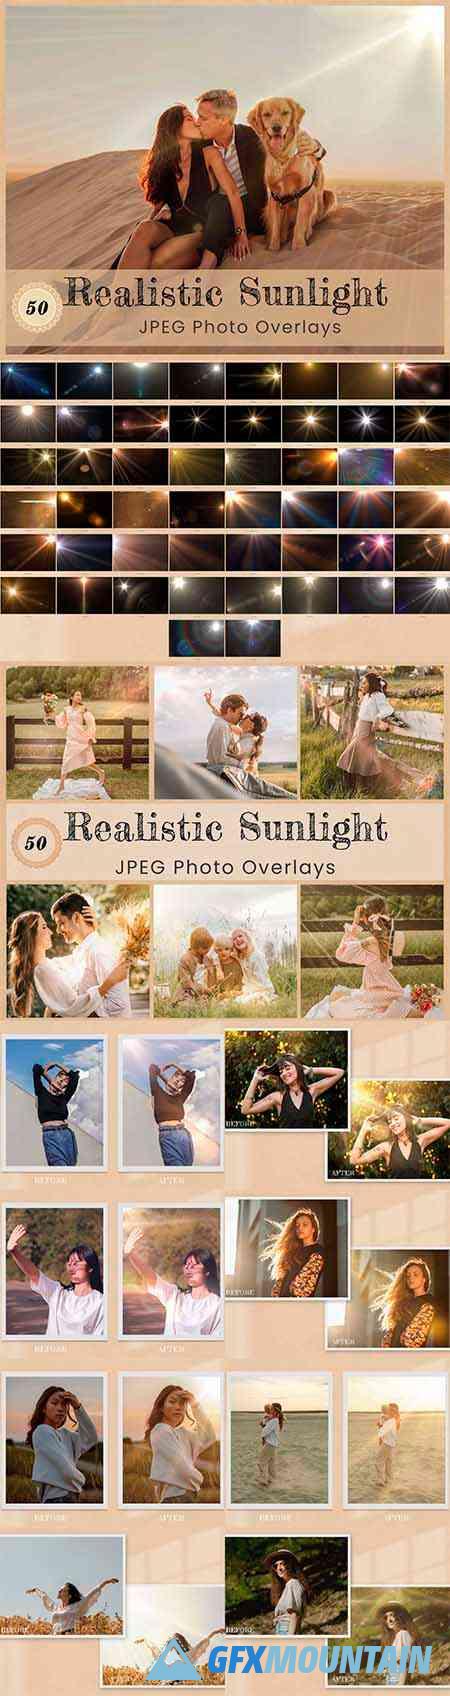 50 Realistic Sunlight Photo Overlay 6316789